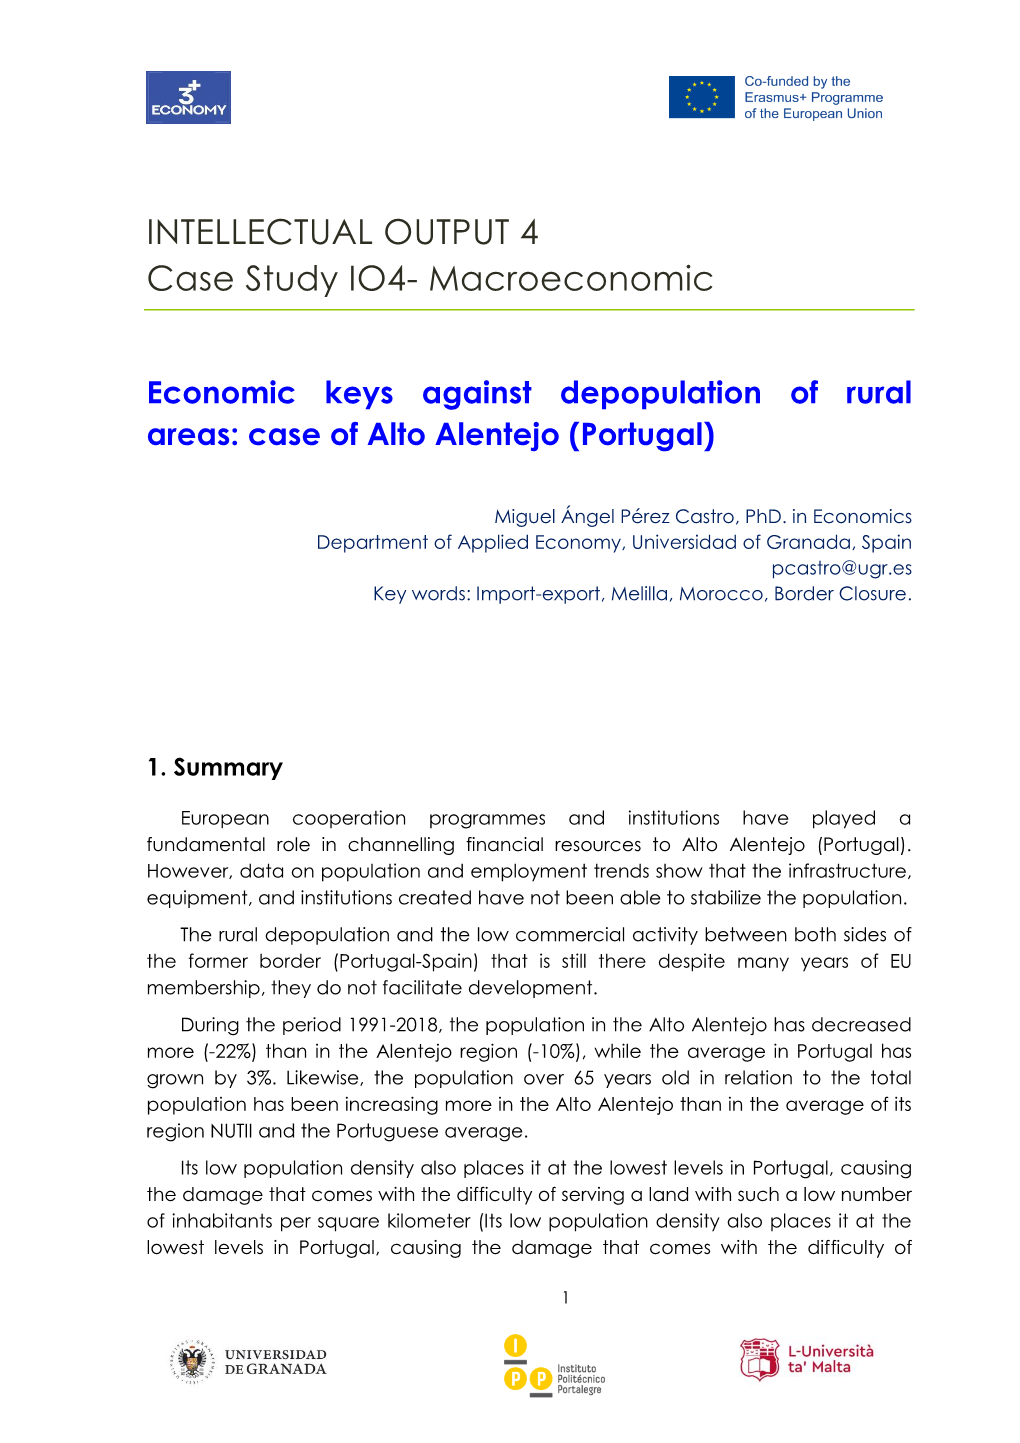 Economic Keys Against Depopulation of Rural Areas: Case of Alto Alentejo (Portugal)